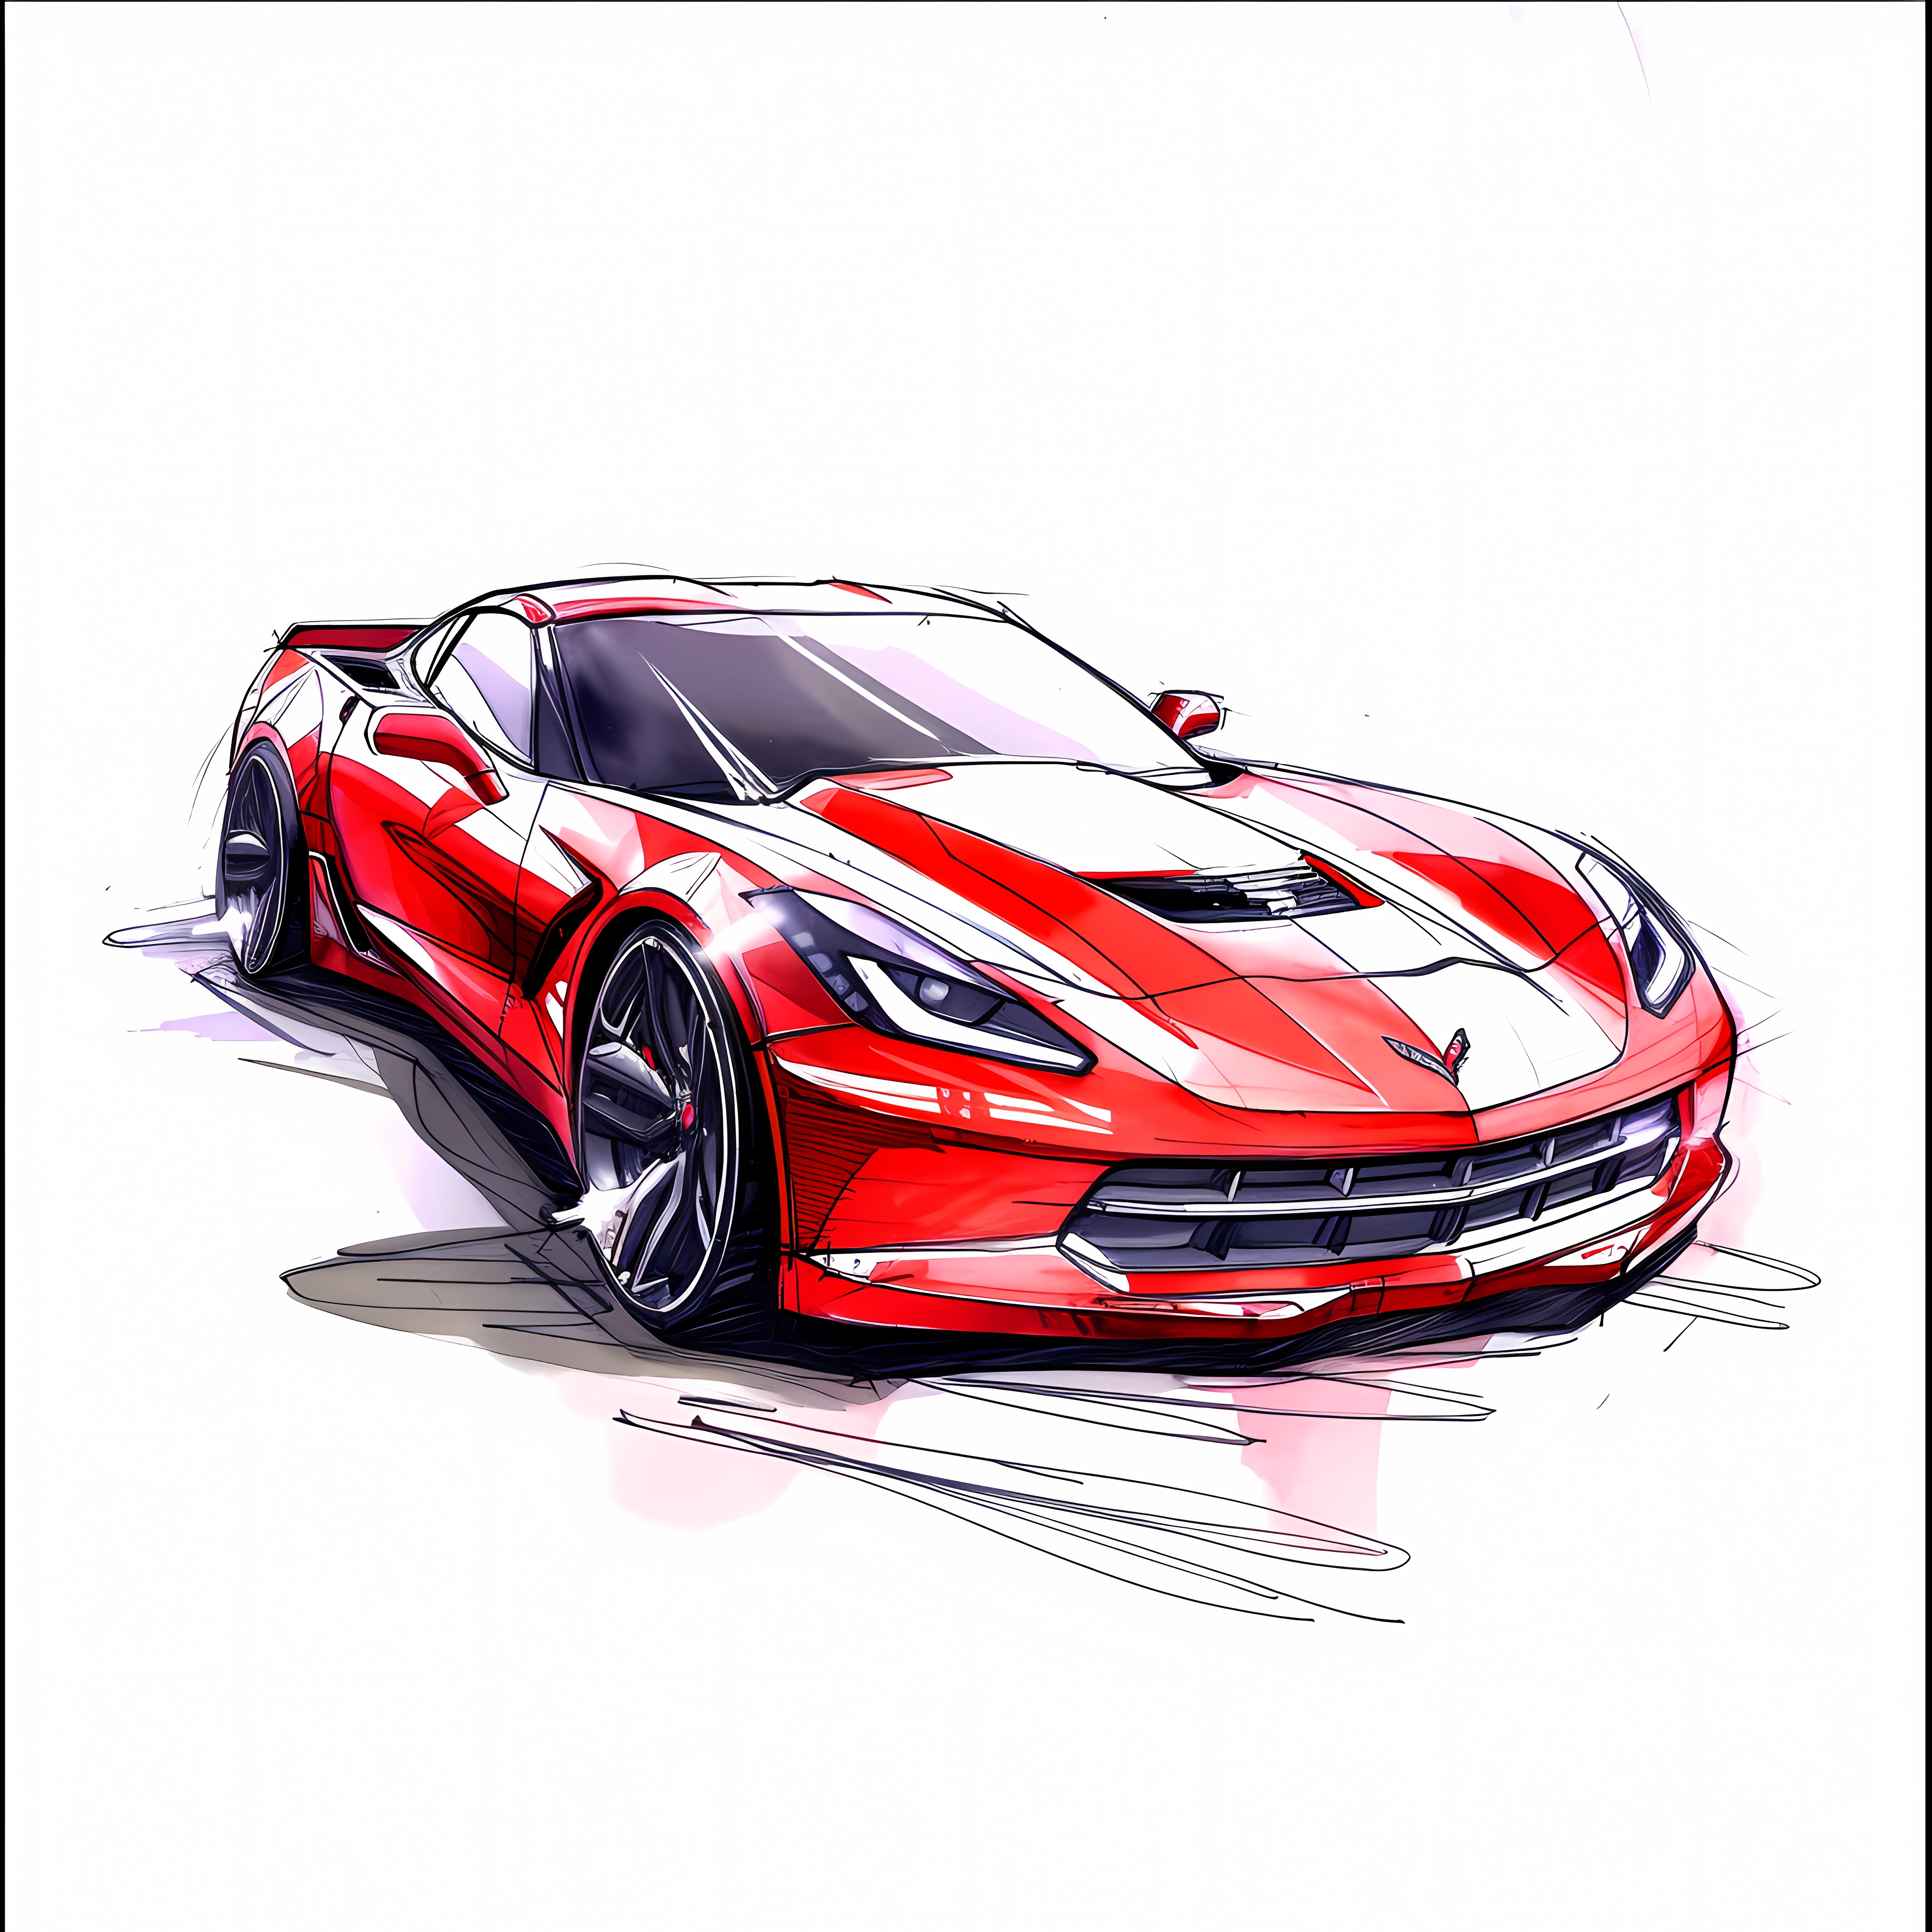 Red Corvette car design sketch, artistic concept for an avatar or profile picture.